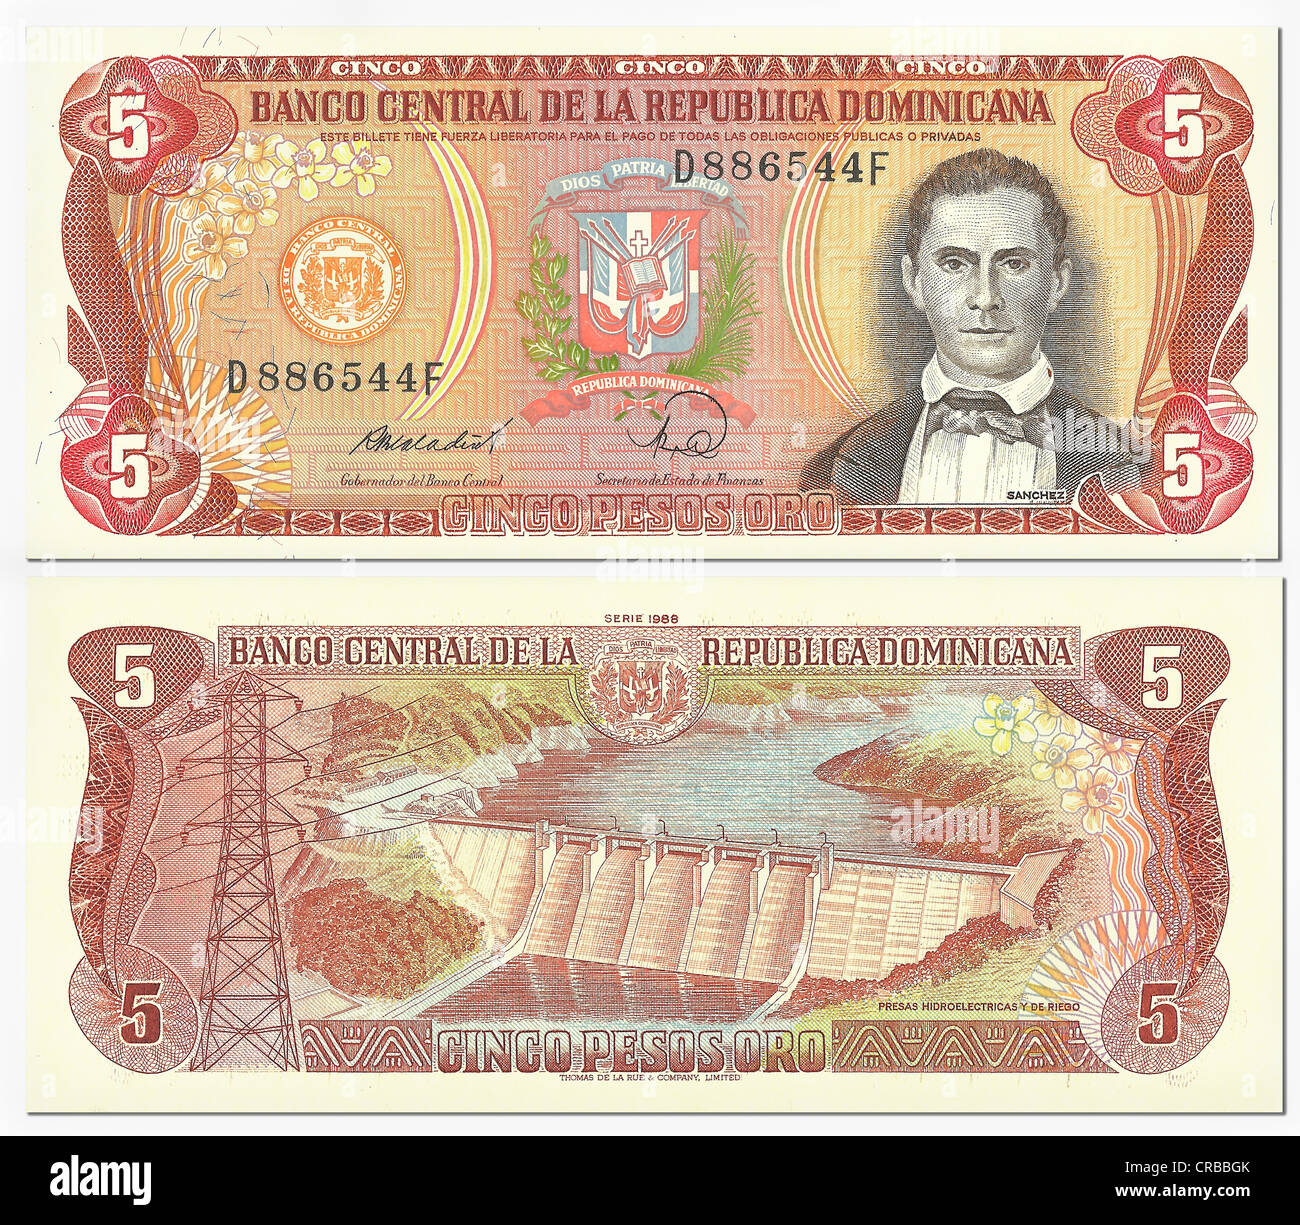 Historische Banknoten, vorne und hinten, 5 Pesos Oro, Dominikanische Republik, Banco Central Republica Dominicana Stockfoto